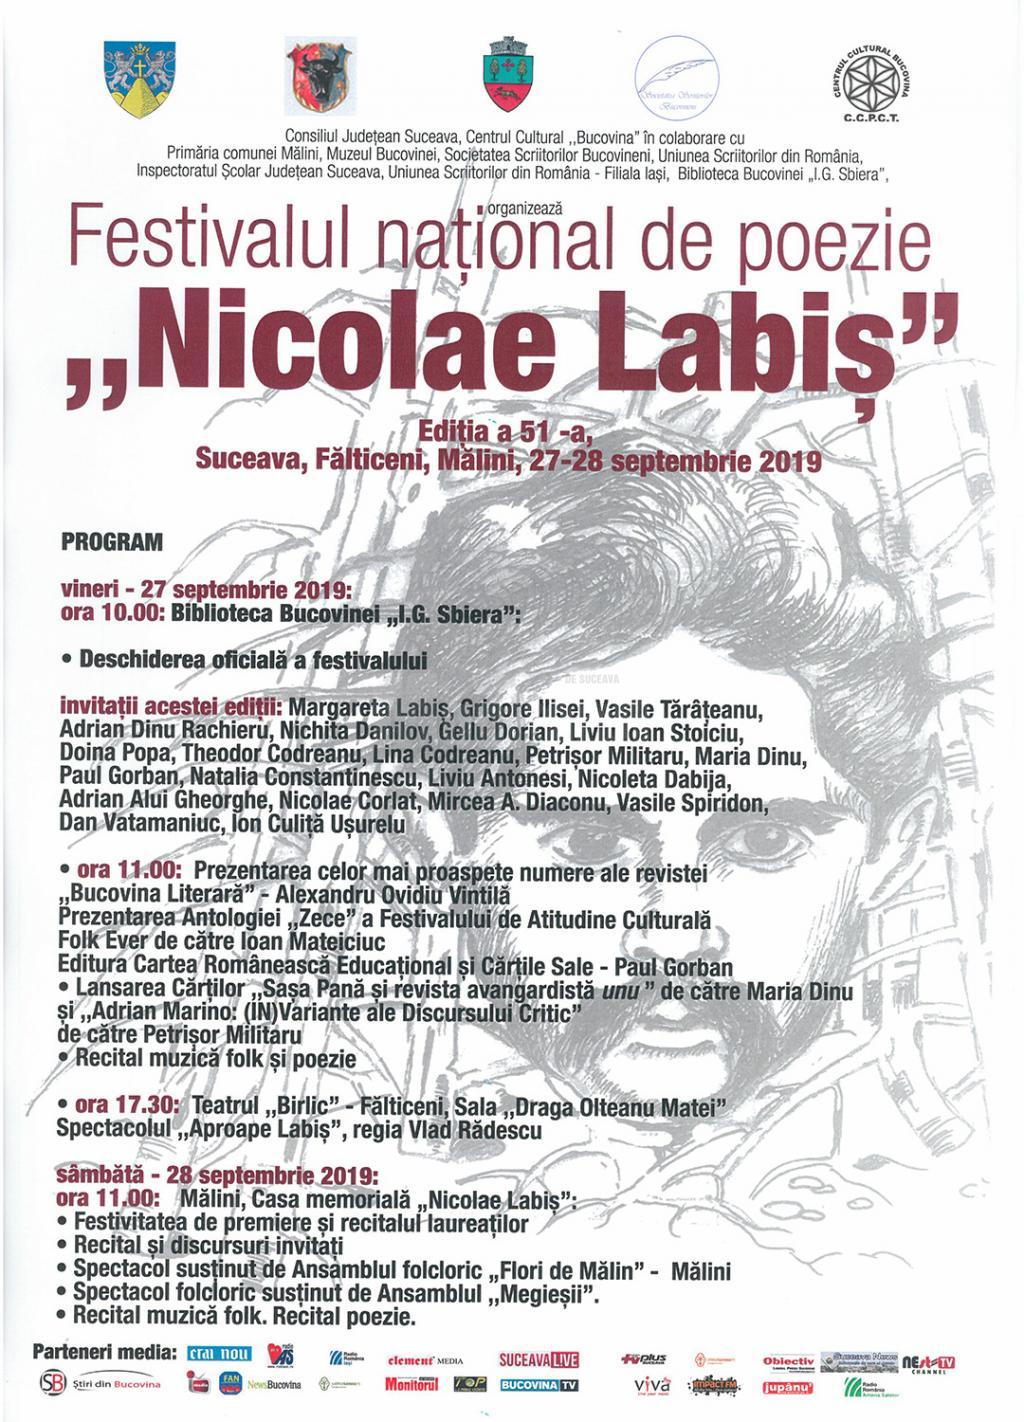 Ultima Ora Local Festivalul National De Poezie Nicolae Labis